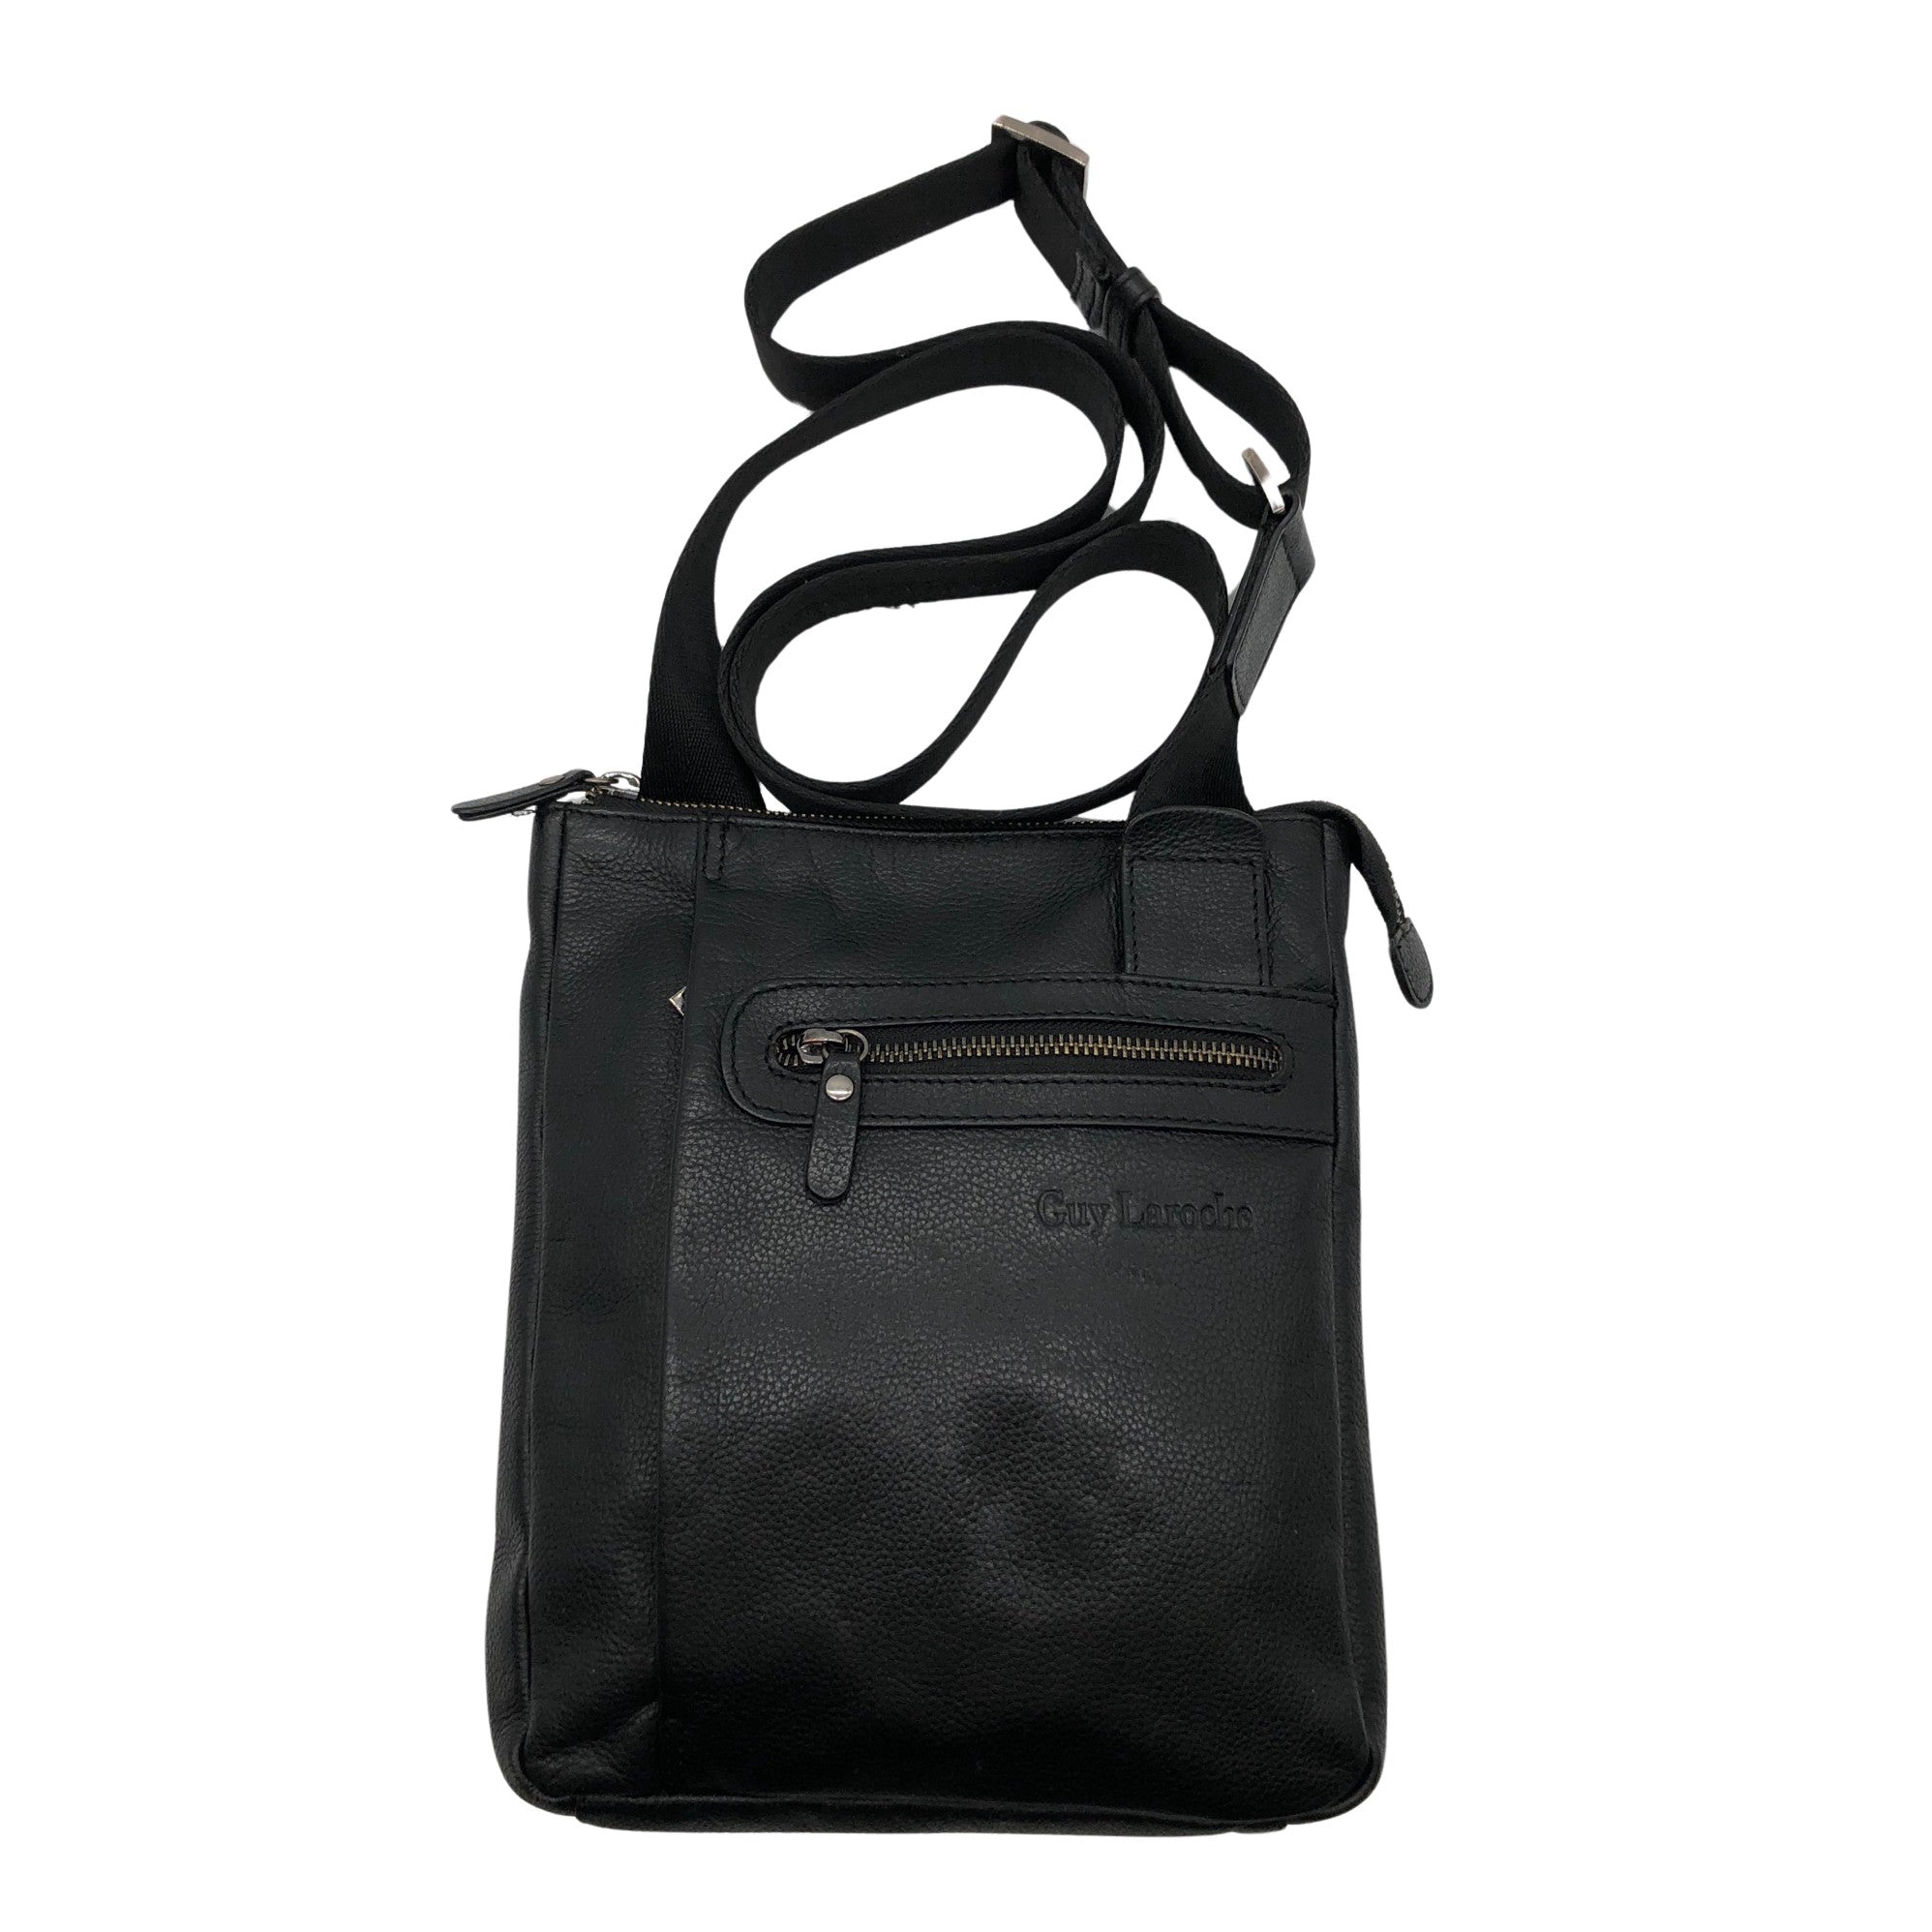 Women's Guy Laroche Shoulder bag, size Mini (Black)